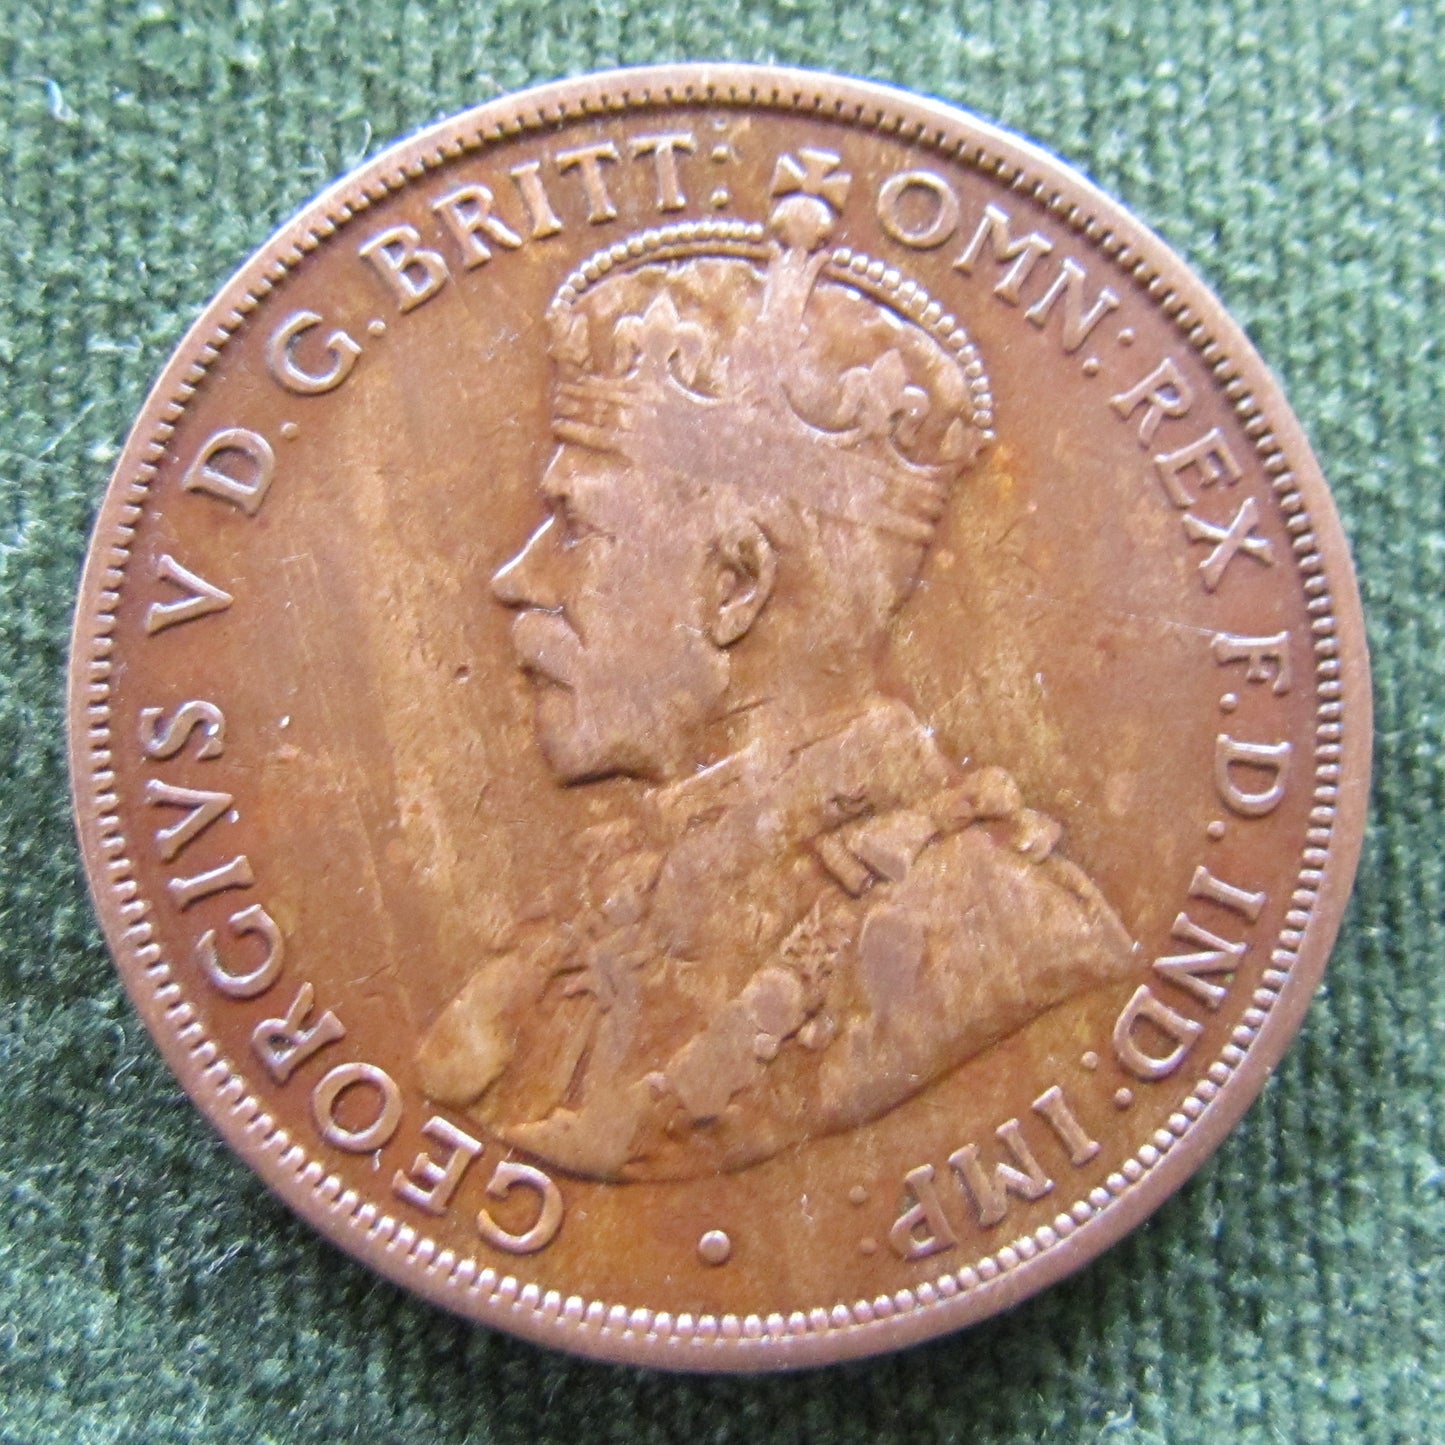 Australian 1919 1d 1 Penny King George V Coin - Variety Planchet Error